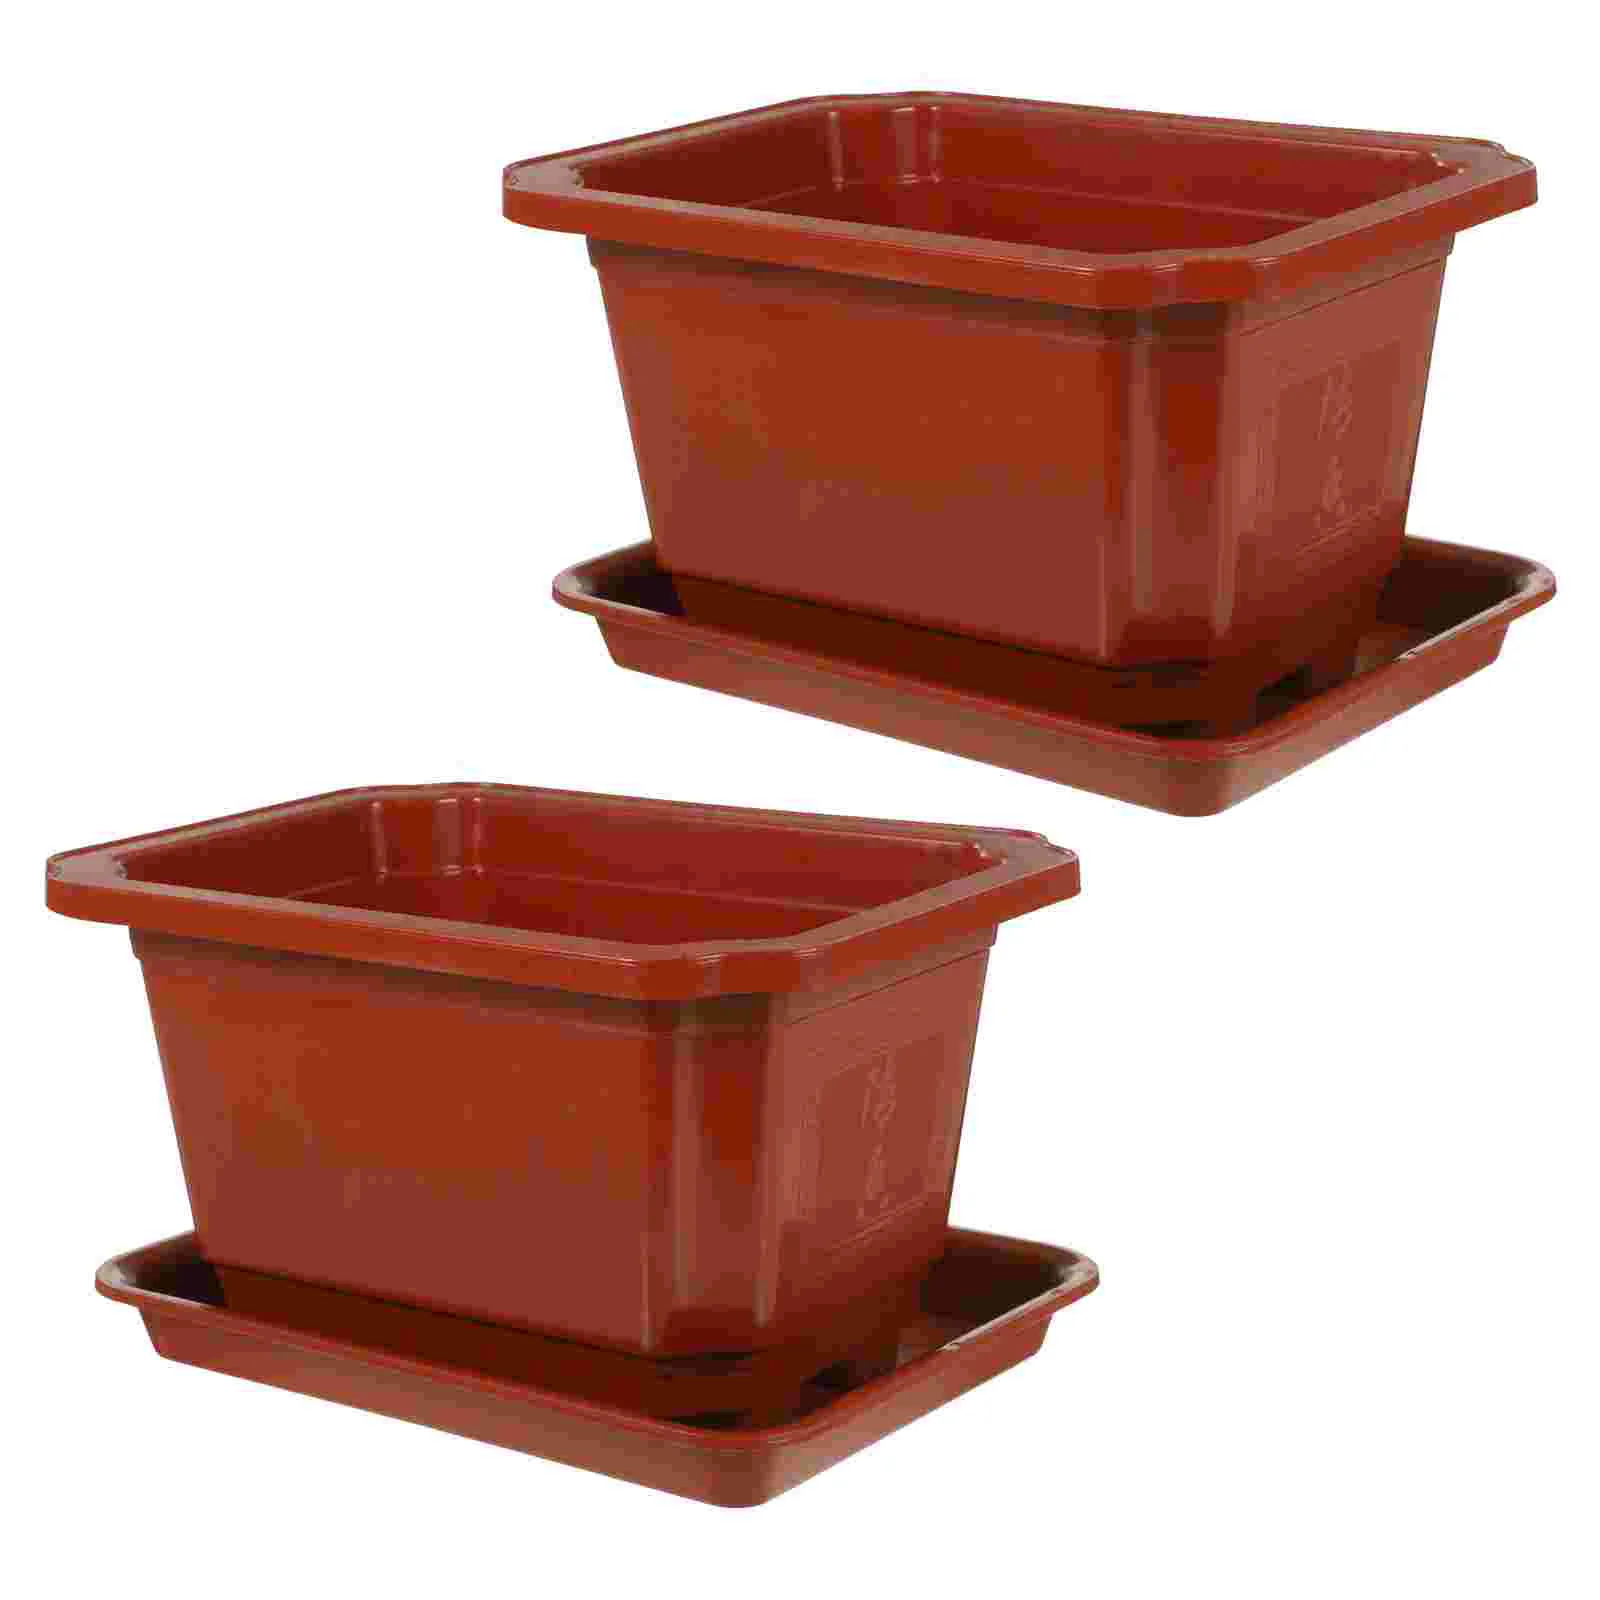 

2 Sets Flower Pot Stand Pots Plants Planter Bowl Watering Container Large Bonsai Trays Plastic Flowerpot Office Gardening